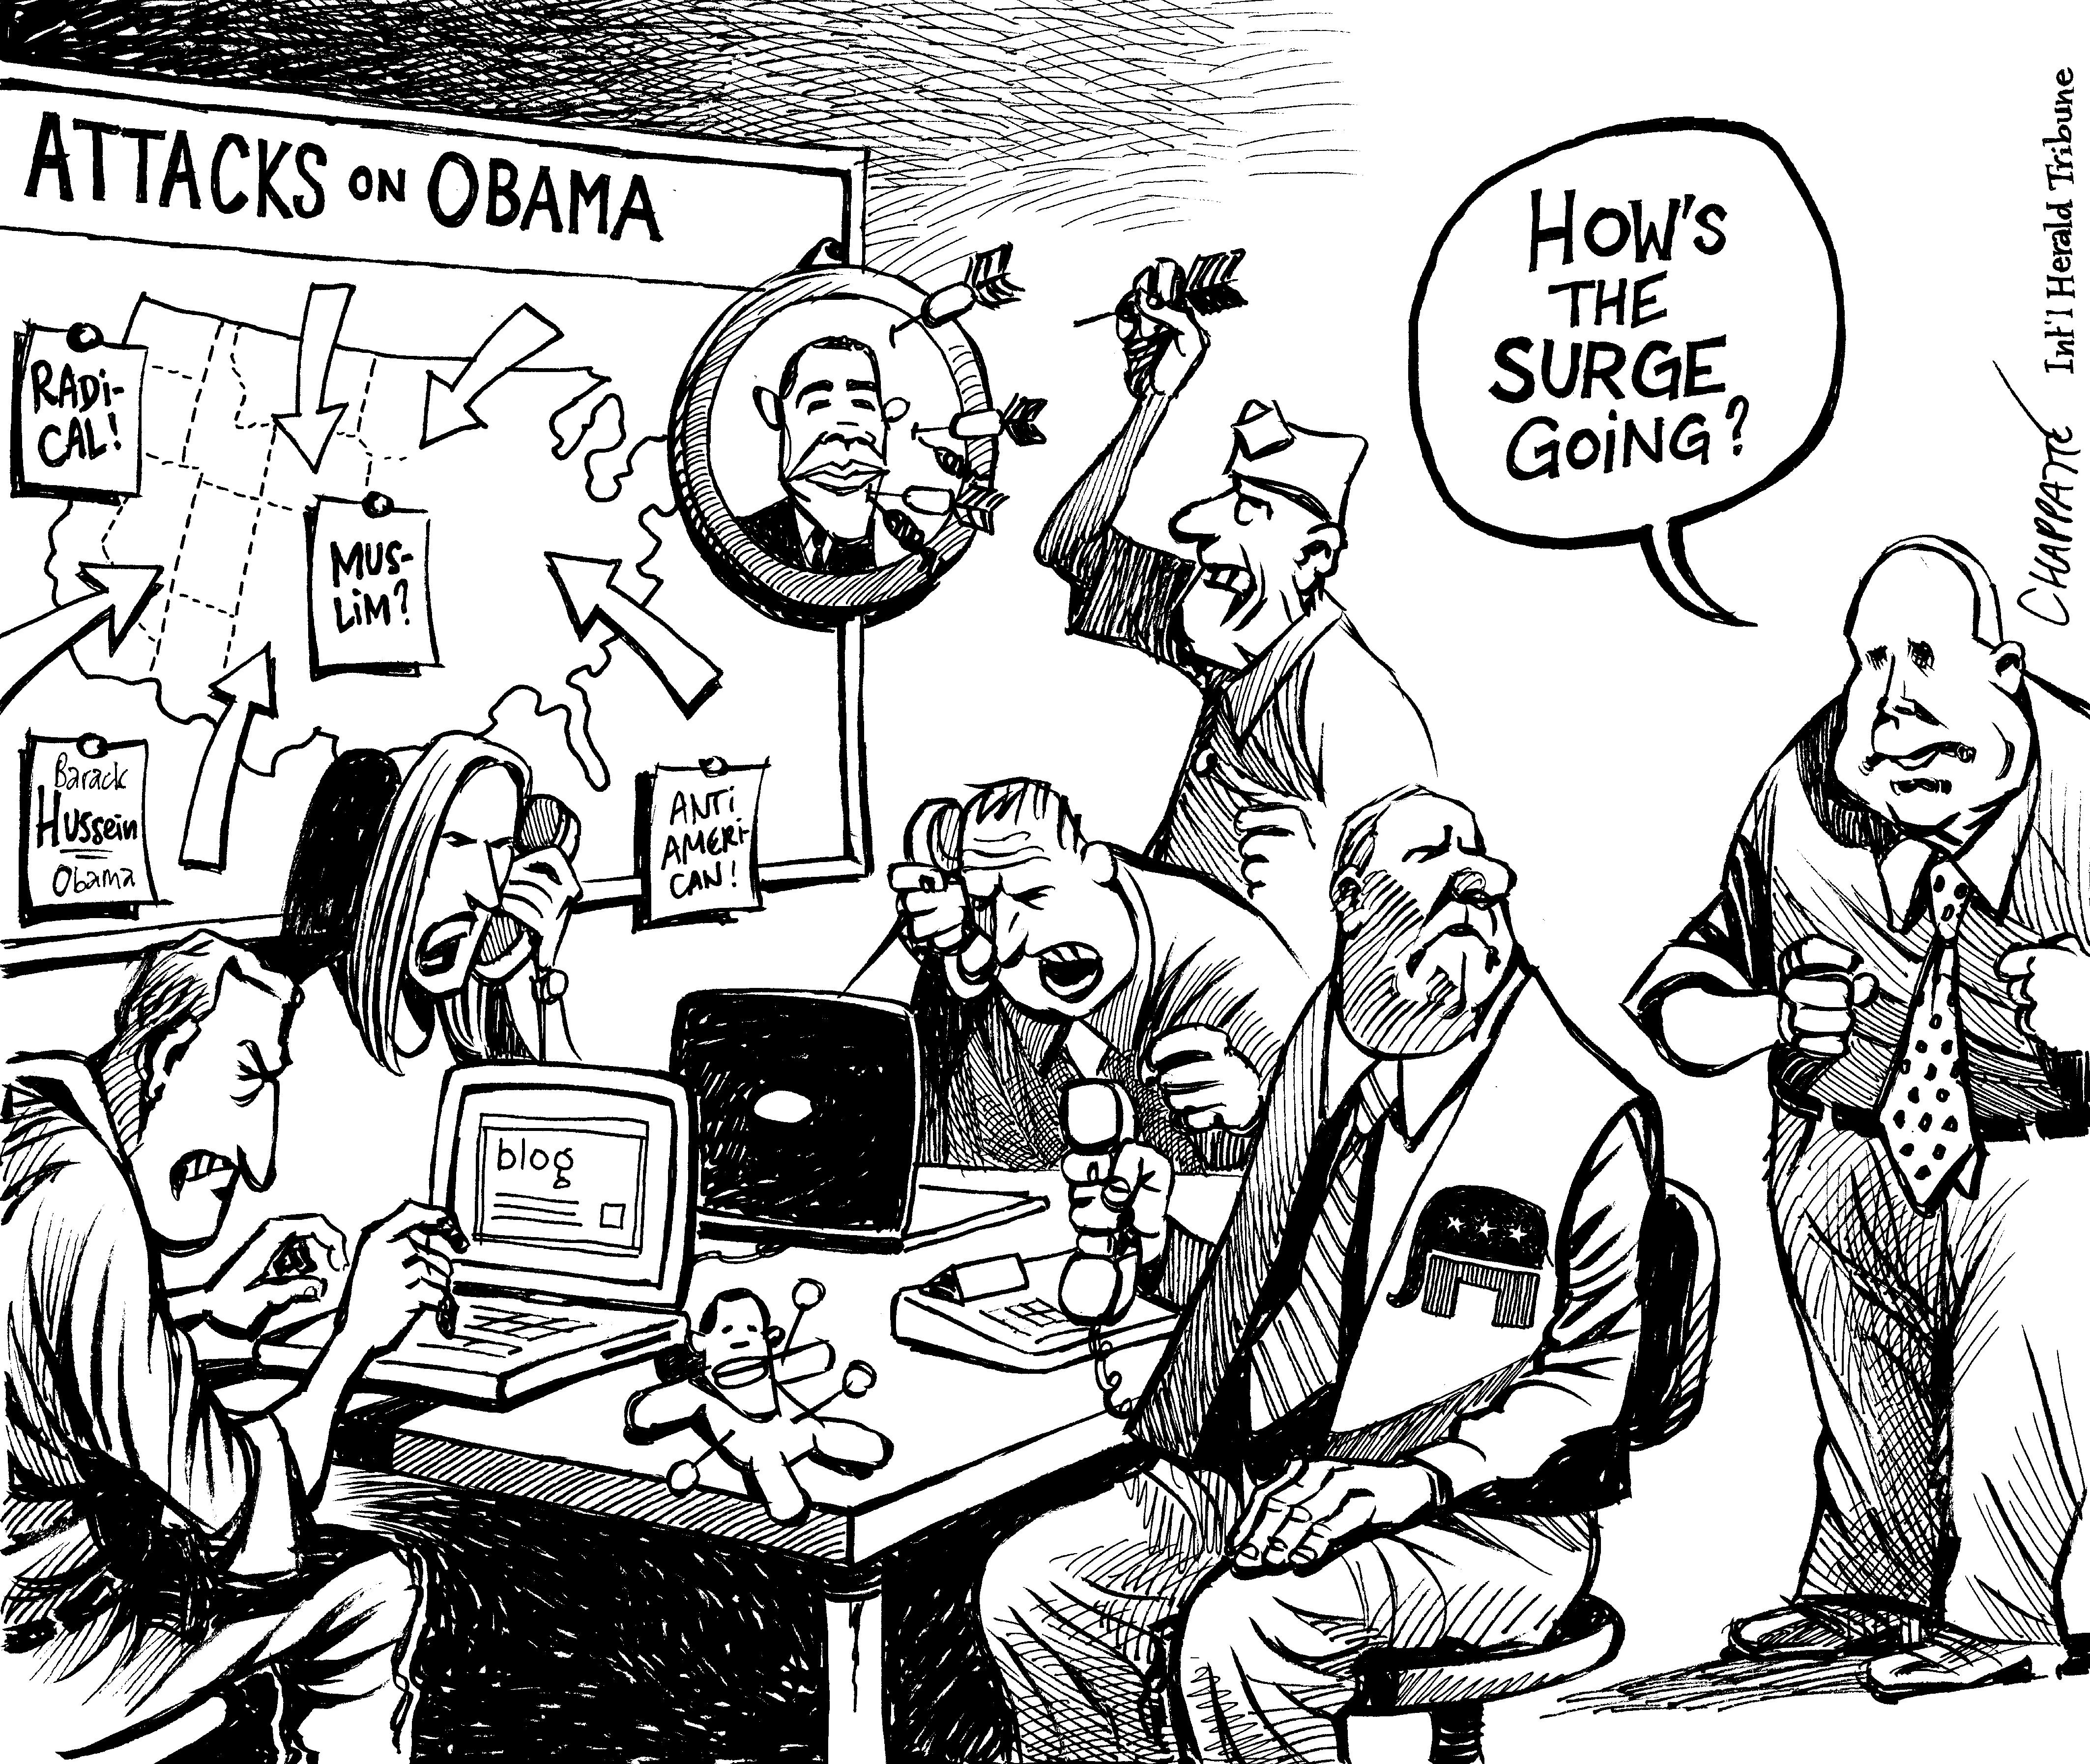 Attacks on Obama